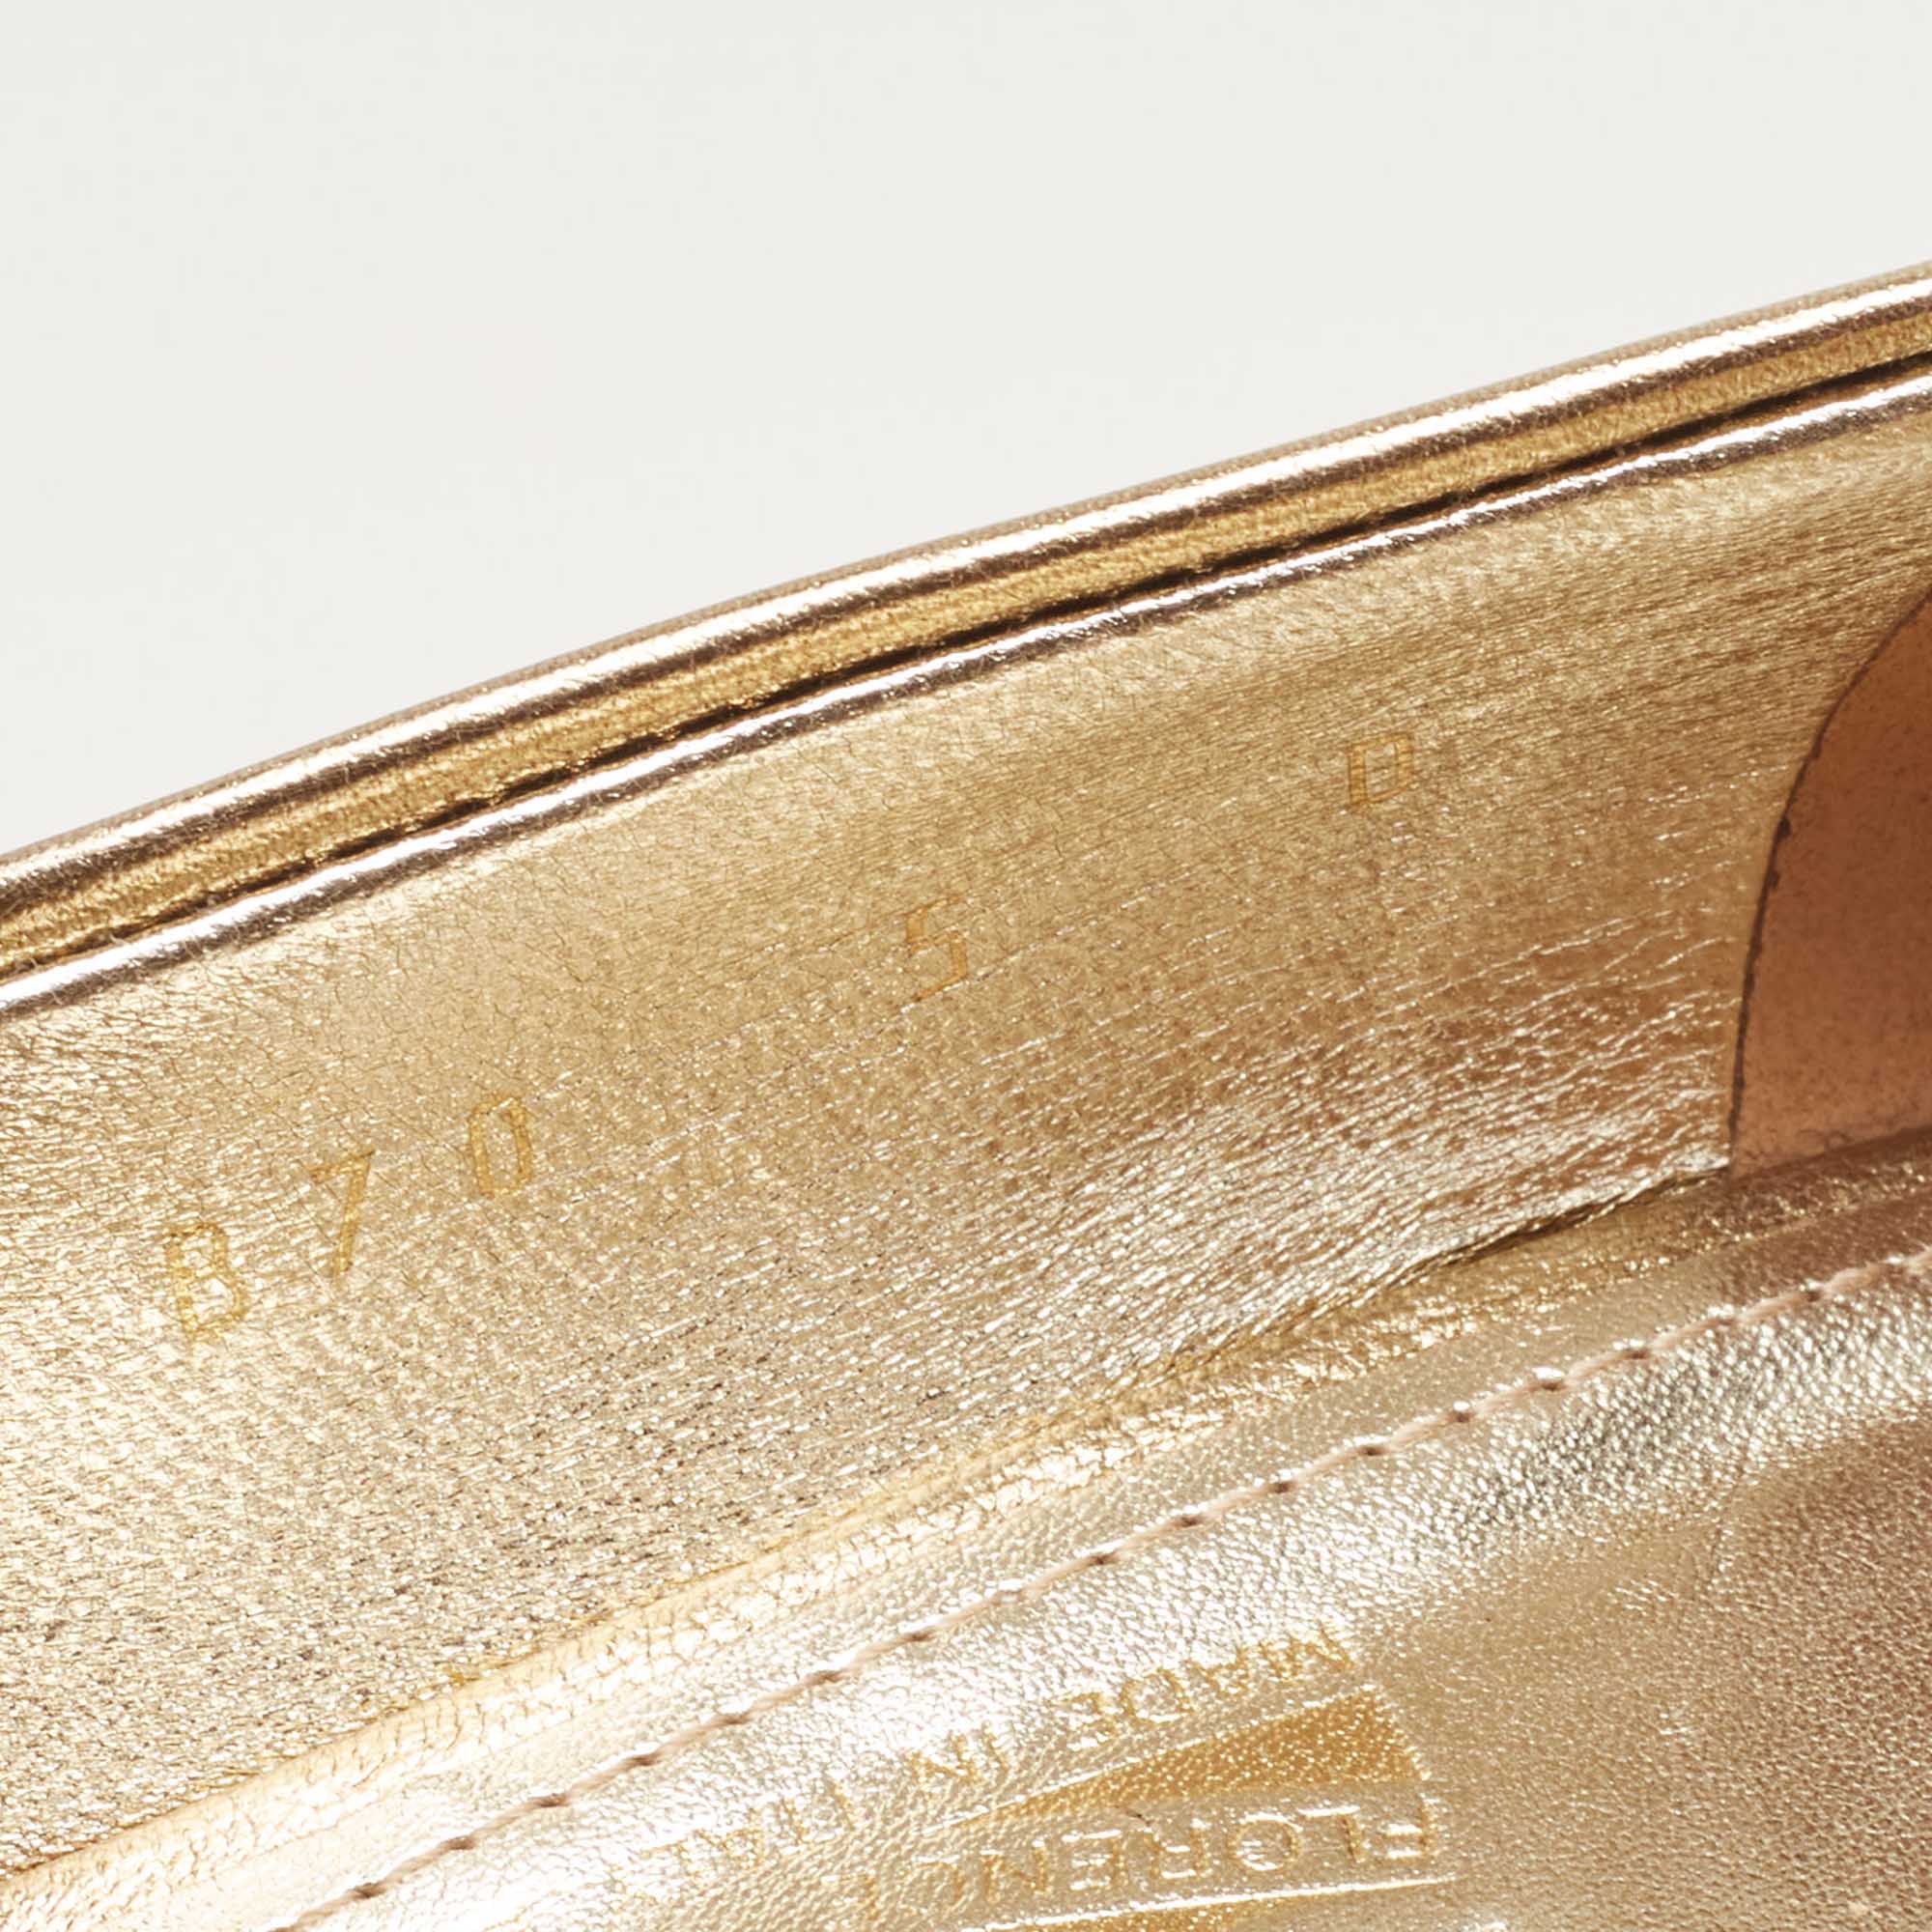 Salvatore Ferragamo Gold Leather Pumps Size 35.5